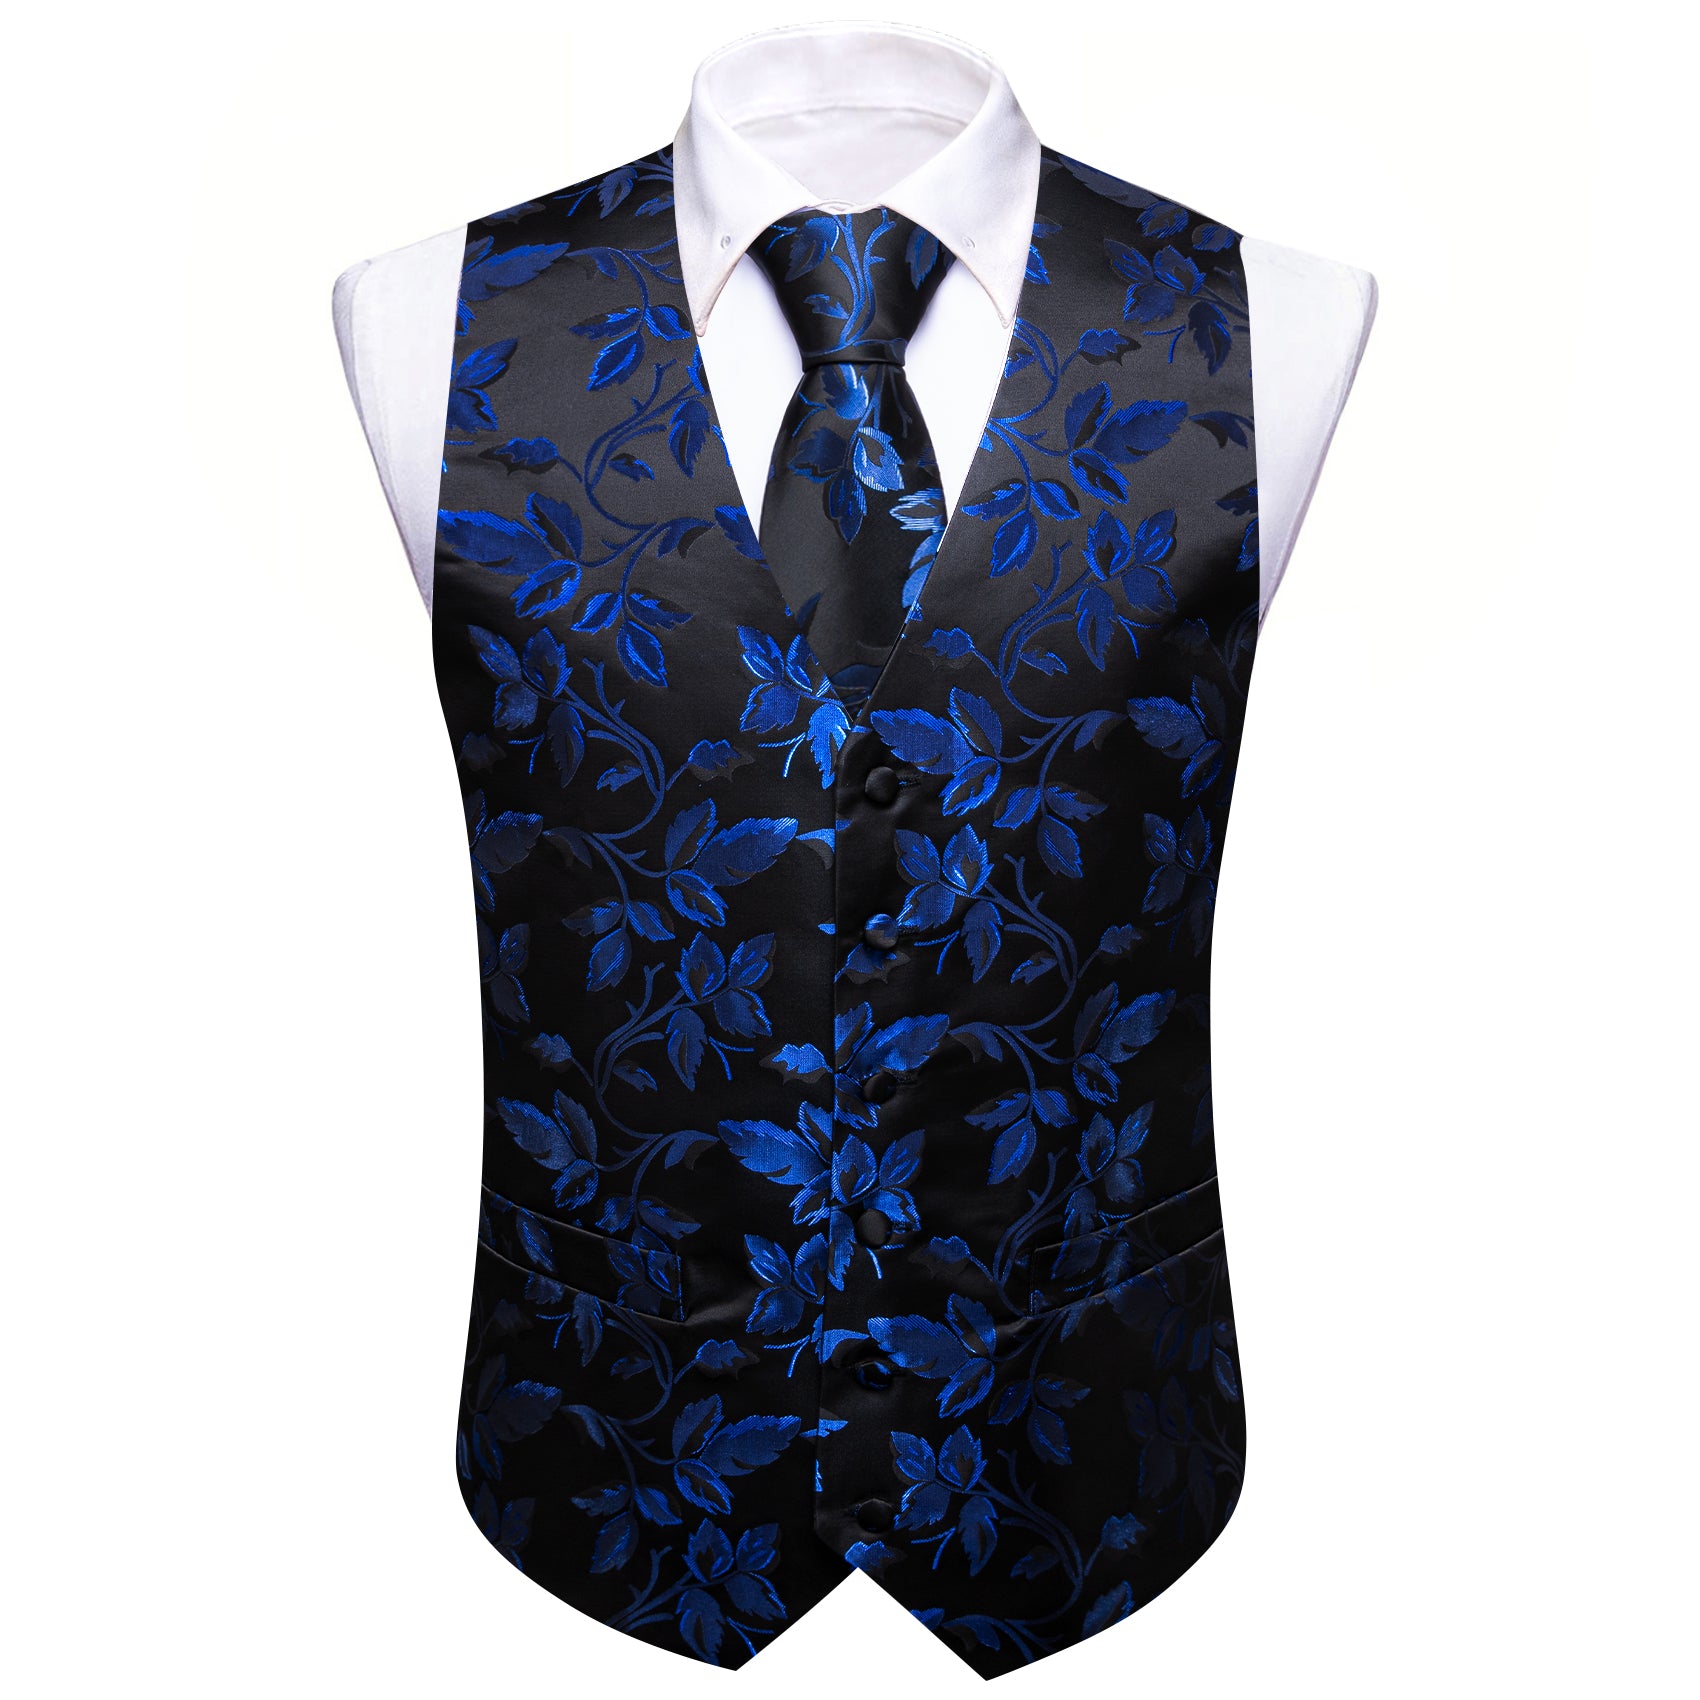 Barry.wang Men's Vest Black Blue Floral Silk Tie Waistcoat Vest Hanky Cufflinks Set